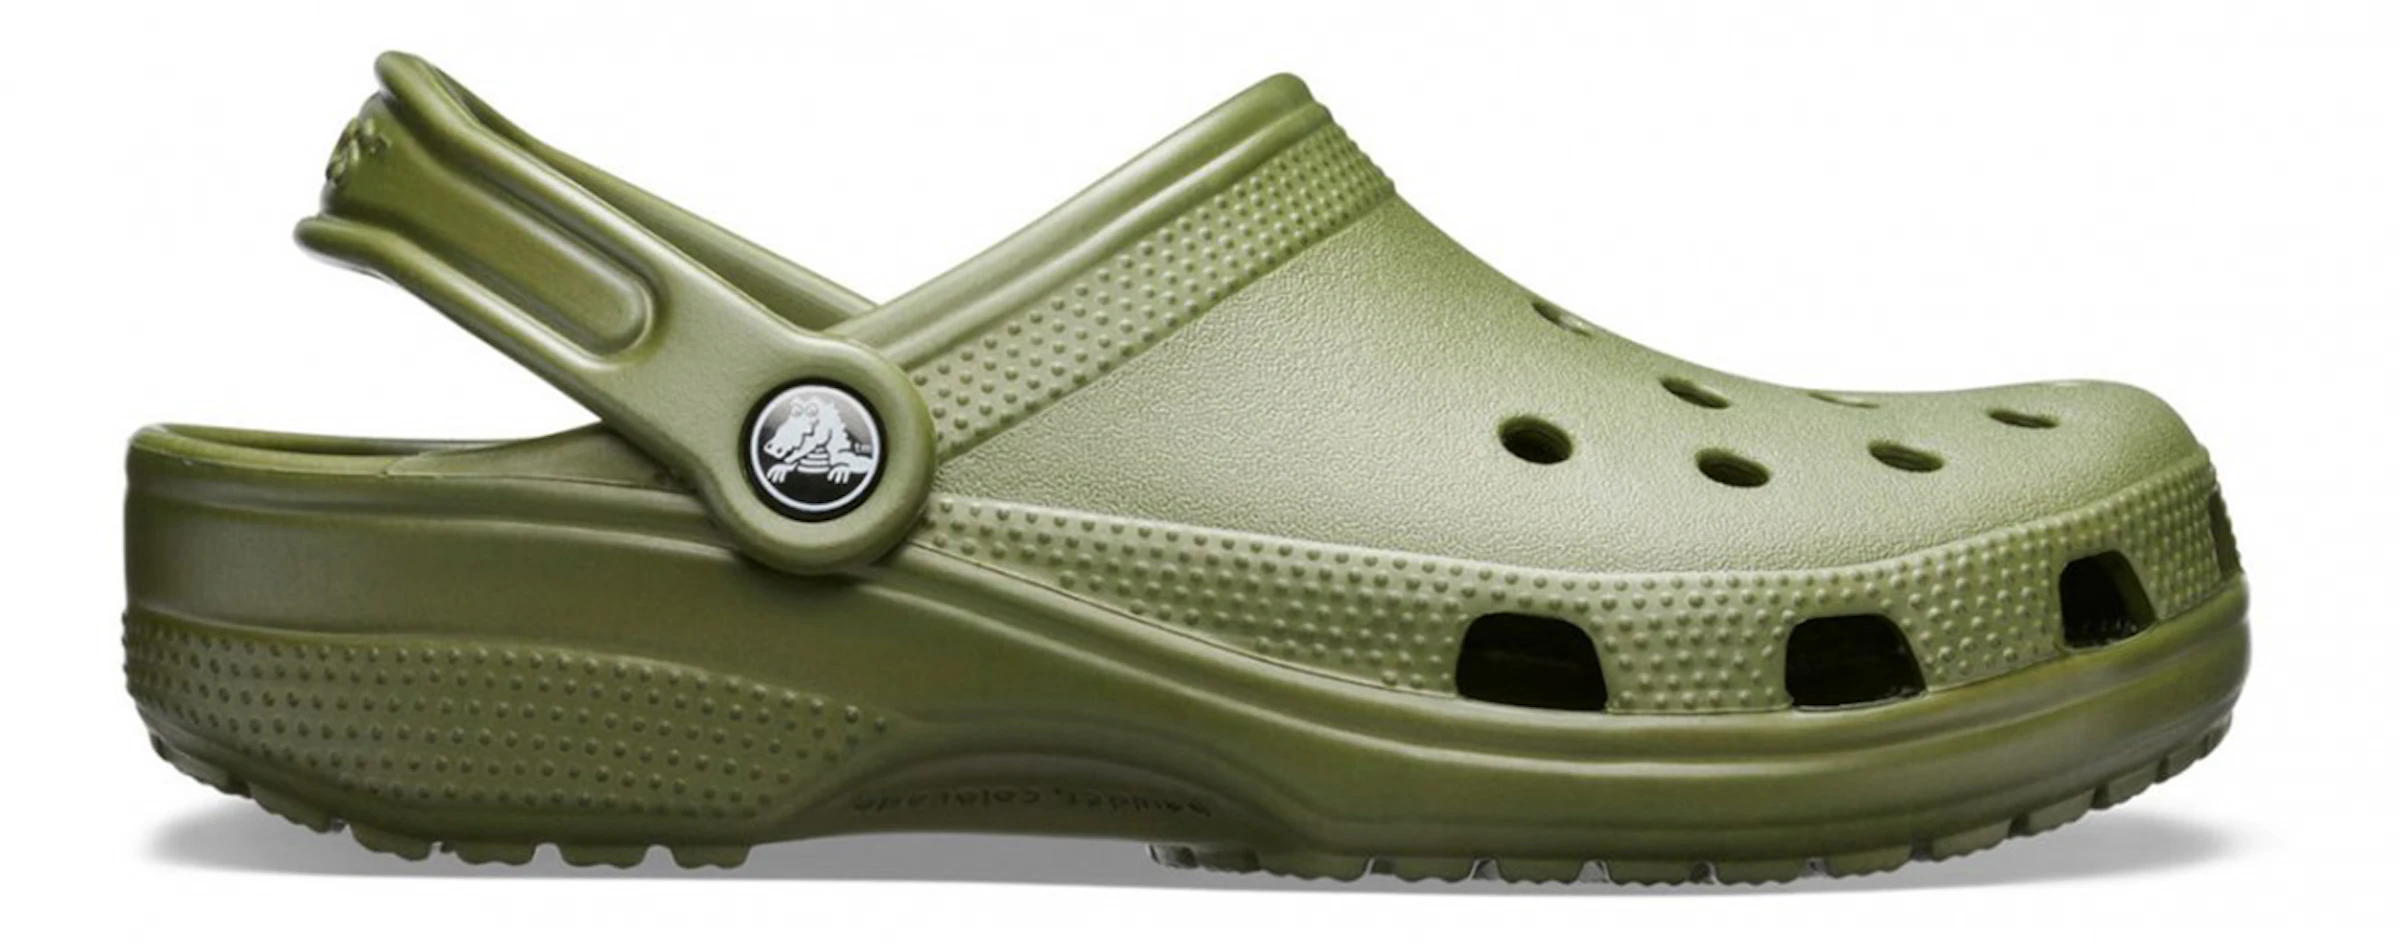 Crocs Classic Clog Army Green - 10001ARMY - US